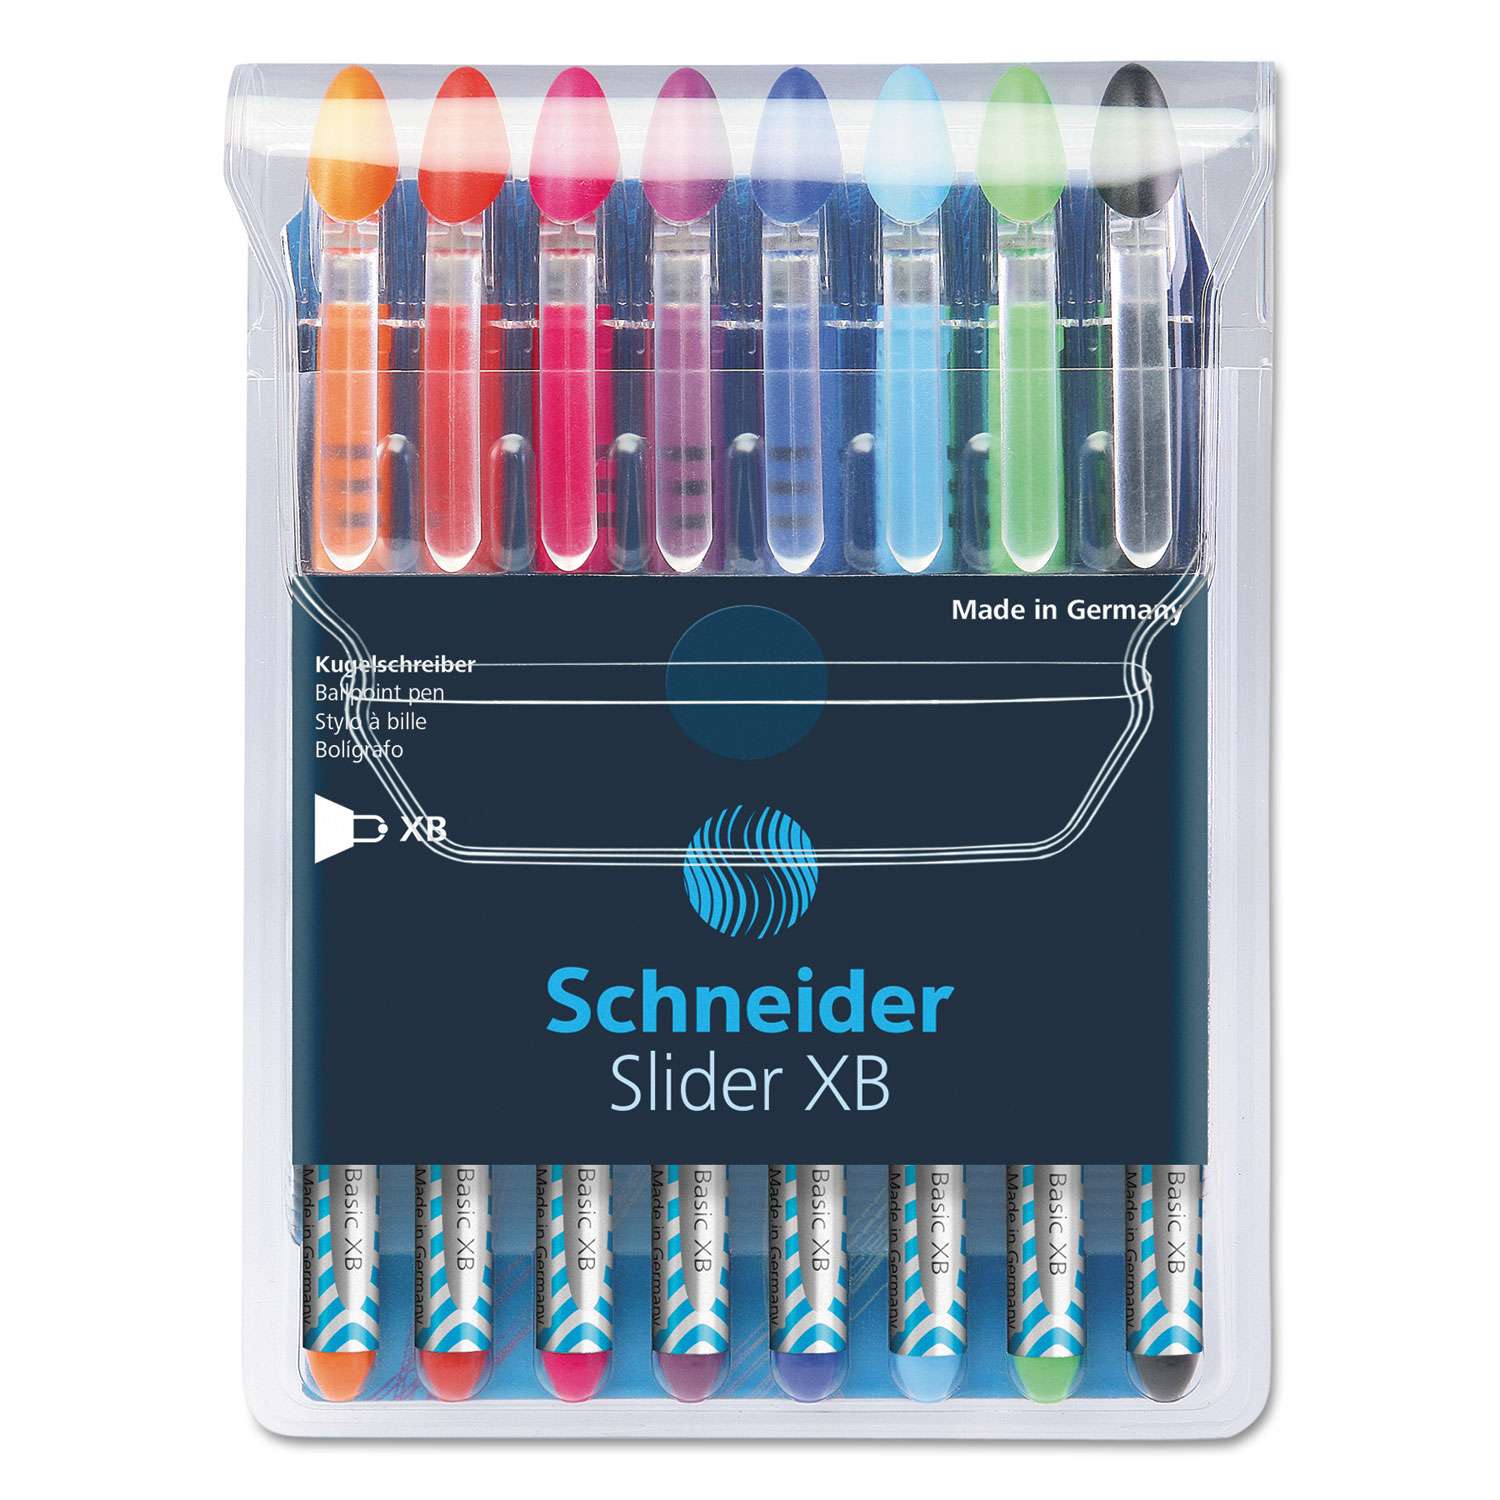 Schneider® Slider Stick Ballpoint Pen, 1.4 mm, Assorted Ink/Barrel, 8/Pack